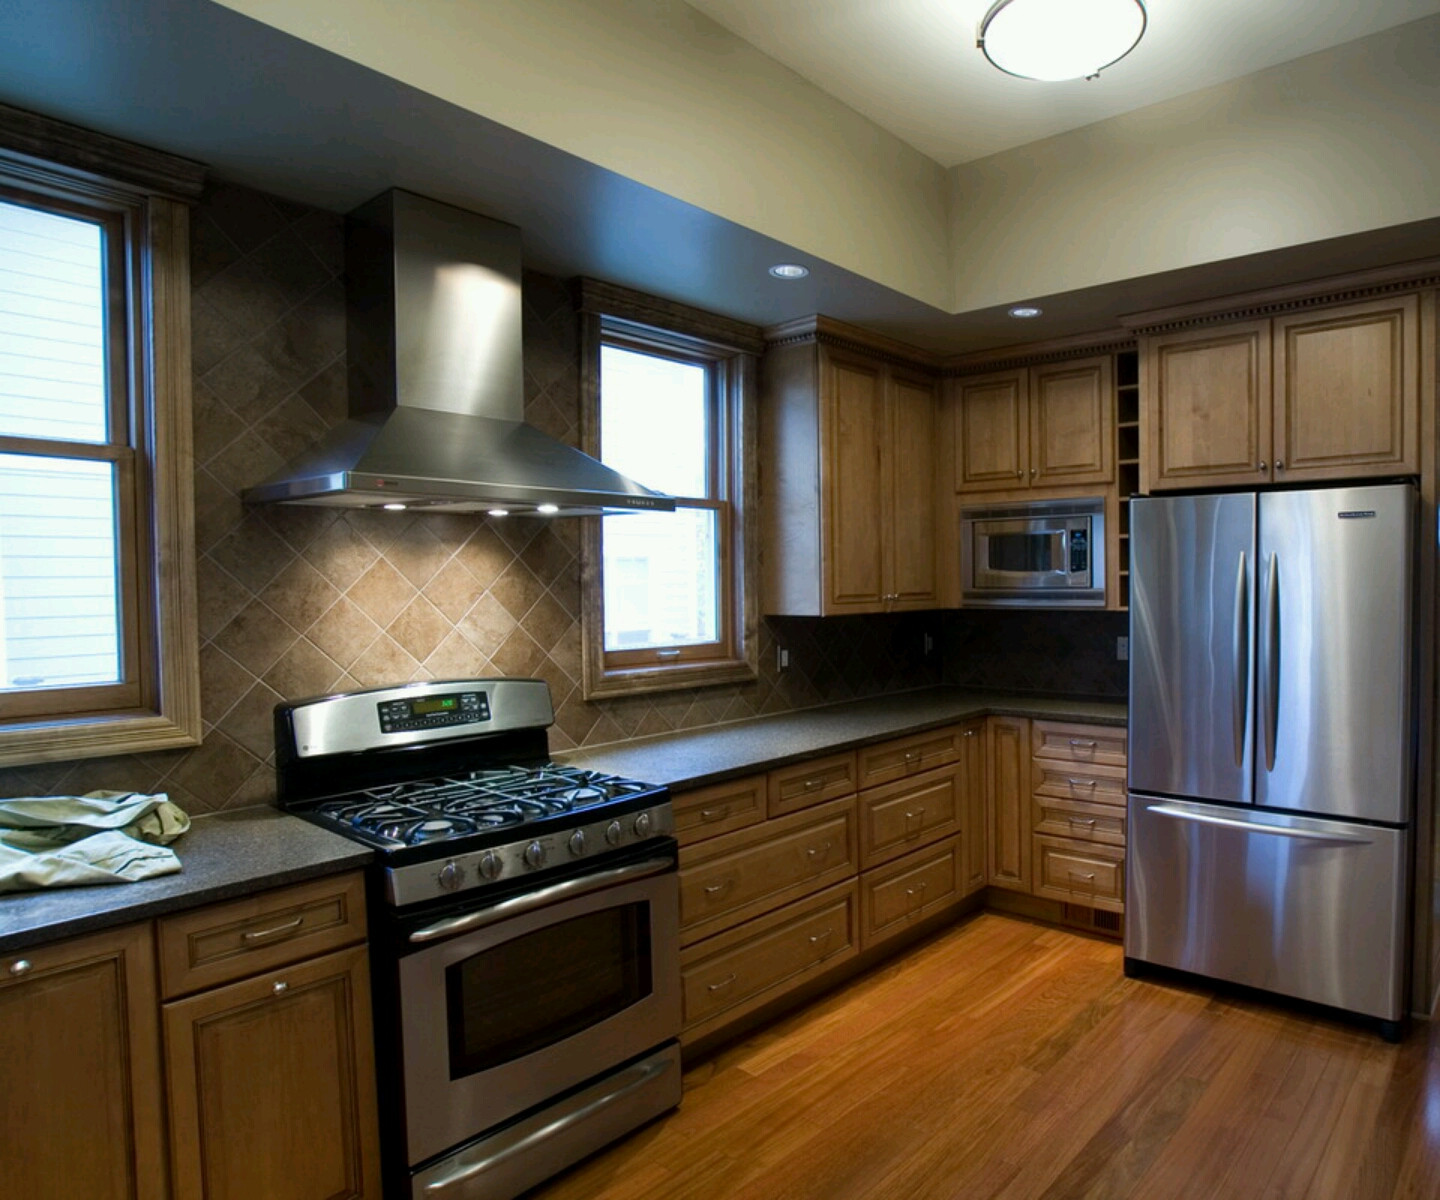 20 Inspiring Modern Kitchen Design Ideas - Home Decoration and ...